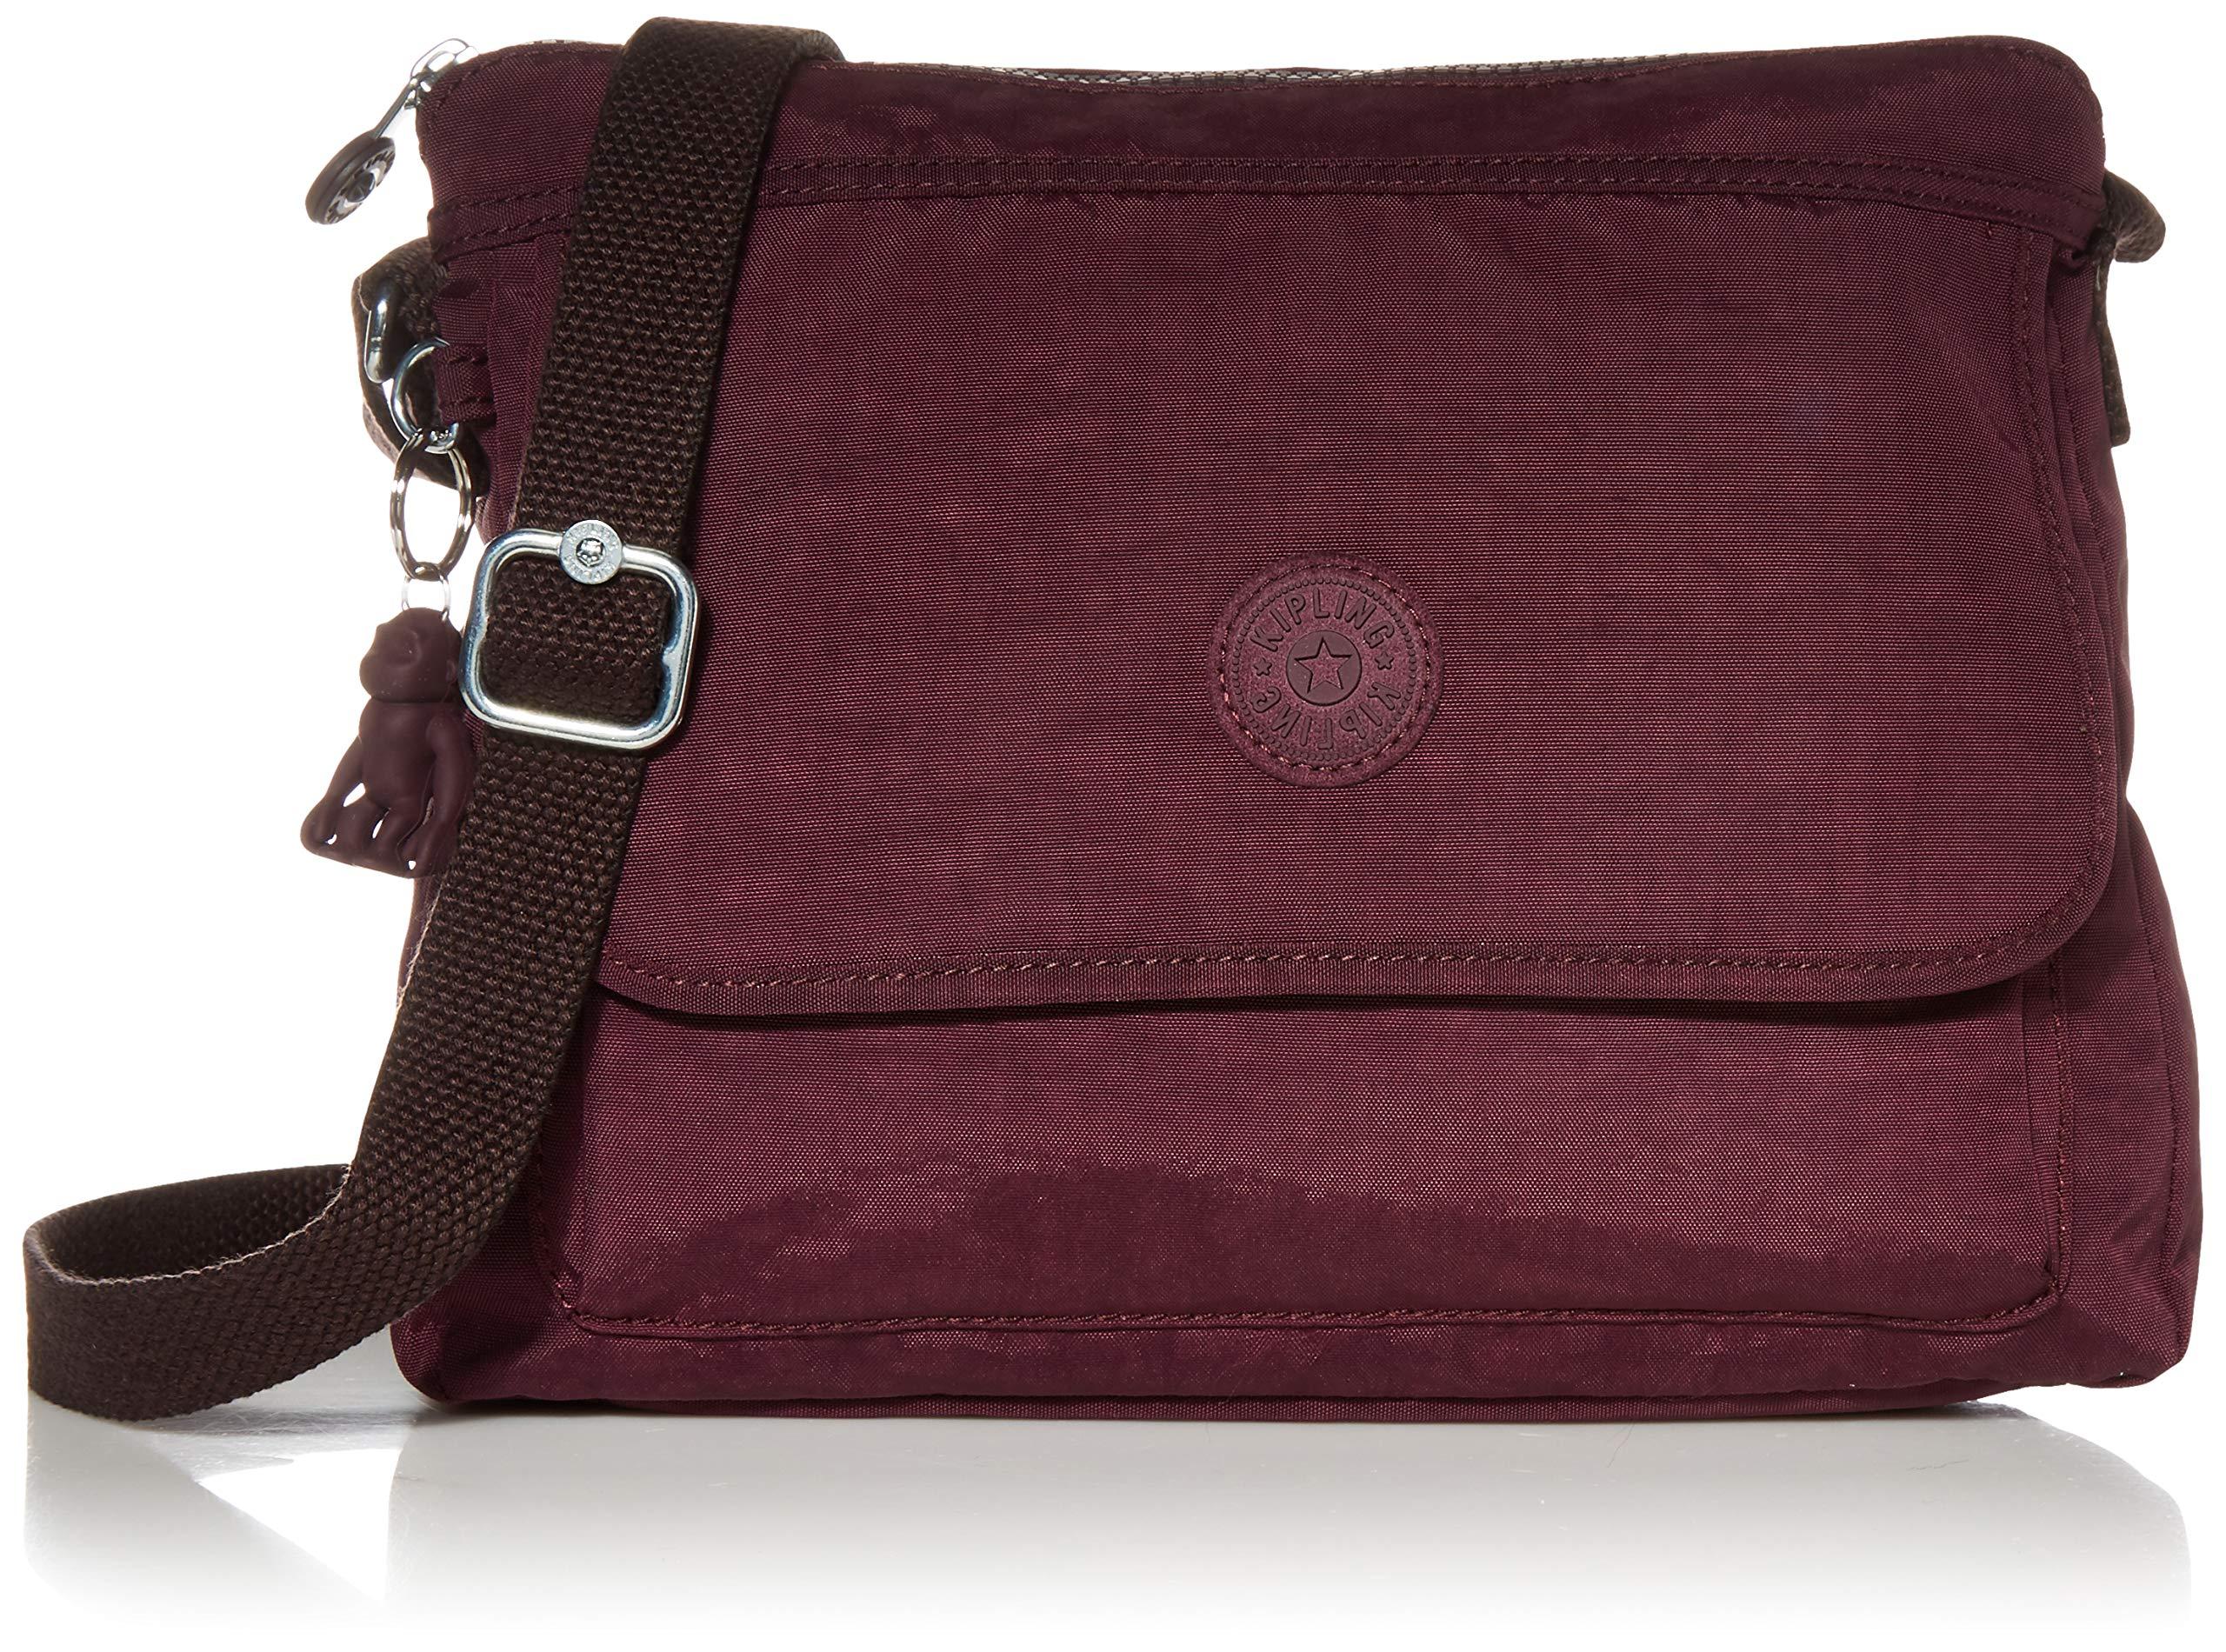 Kipling Synthetic Aisling Crossbody Bag in Dark Plum (Purple) - Lyst